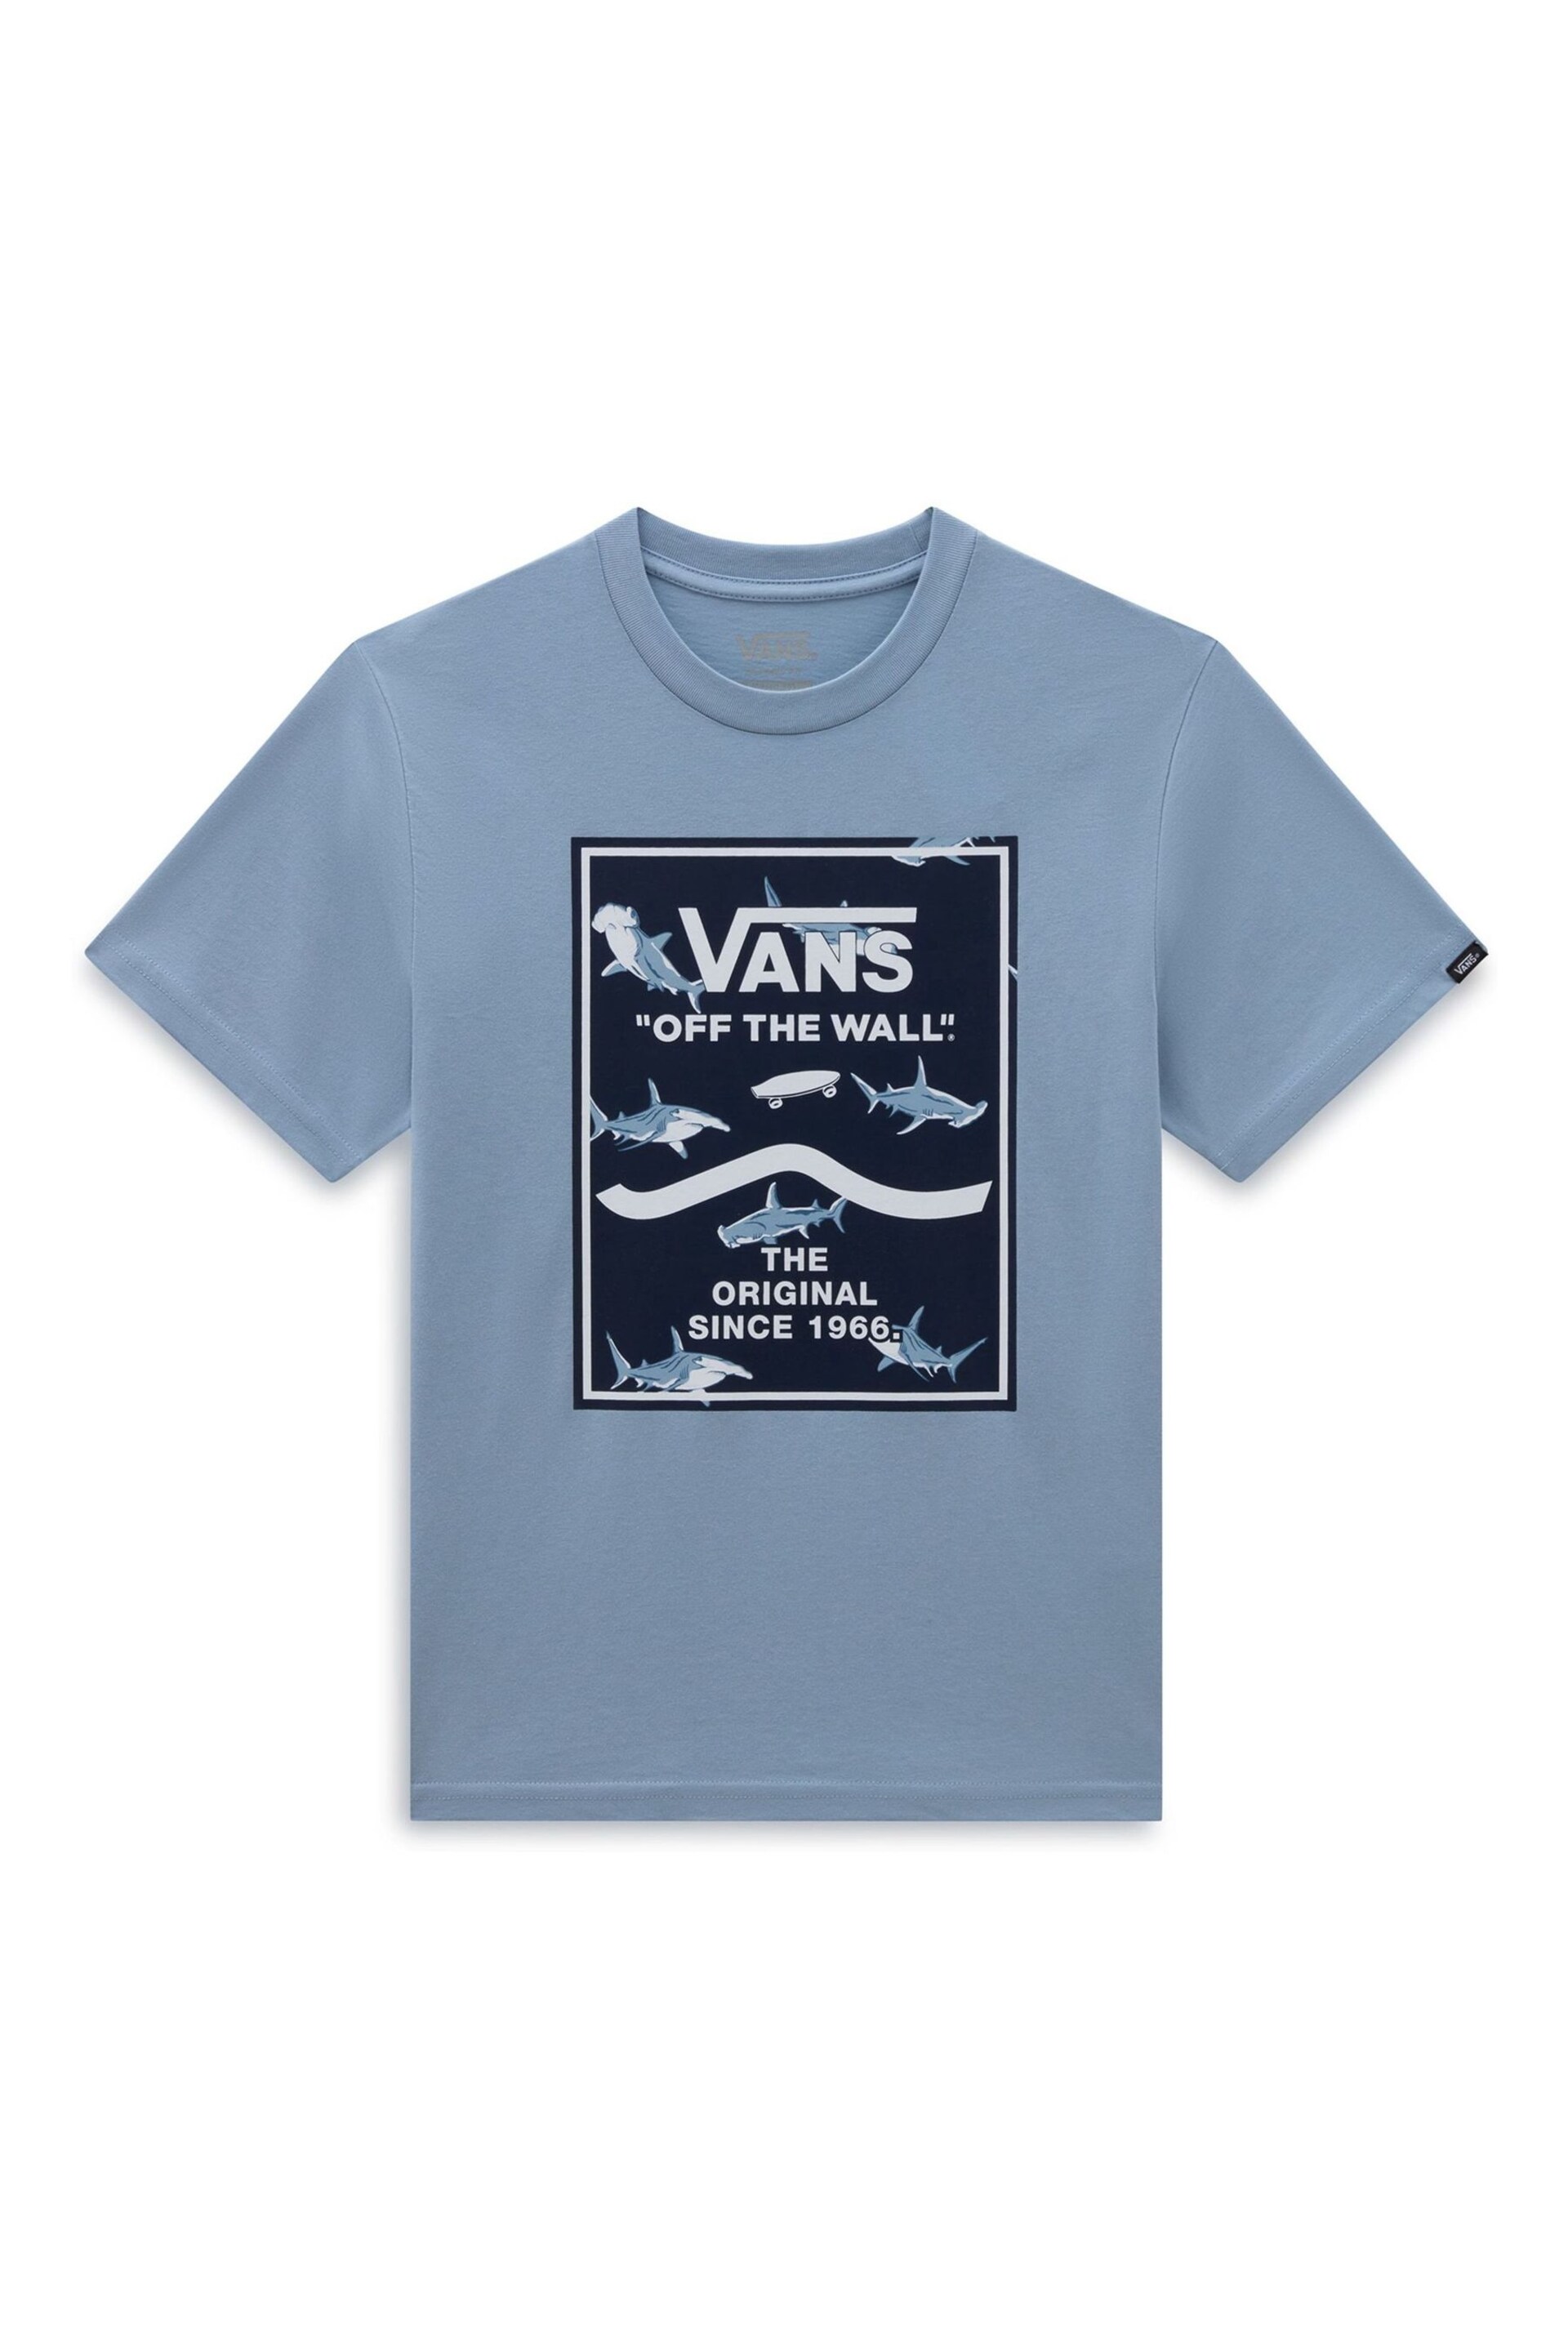 Vans Boys Navy Print Box T-Shirt - Image 1 of 2